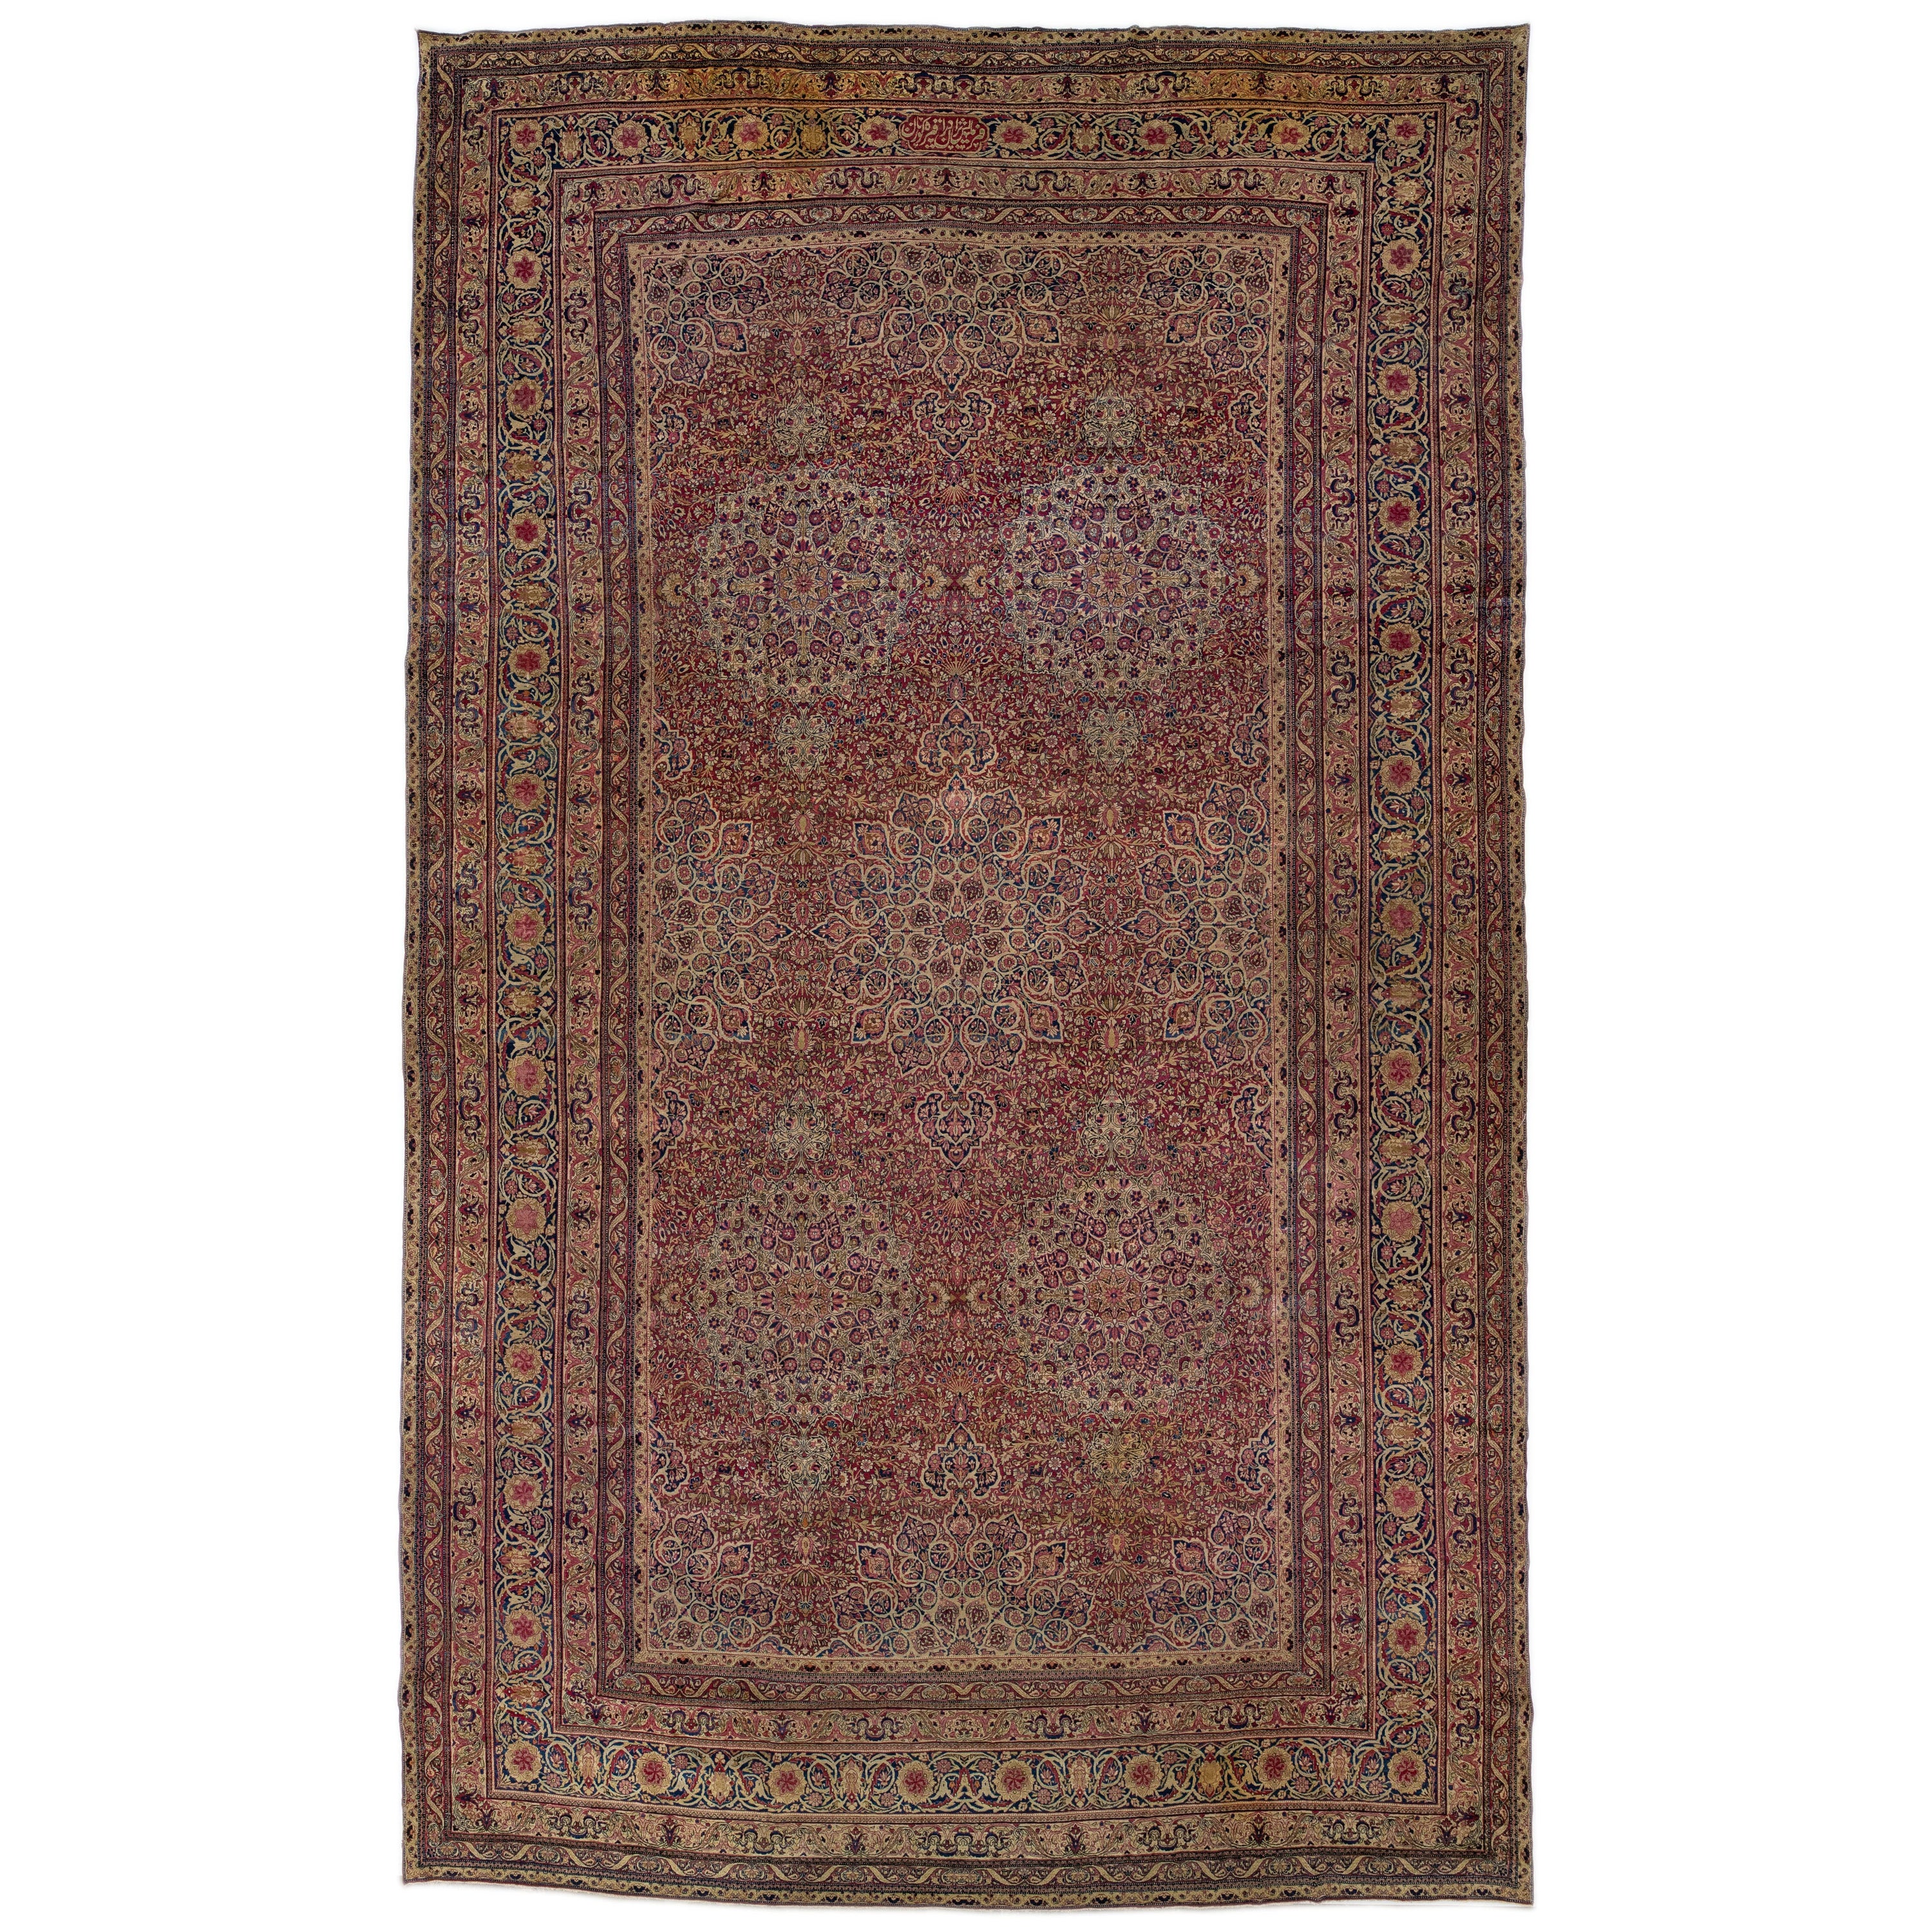 Antique Persian Kerman Handmade Multicolor Wool Rug with Rosette Design For Sale